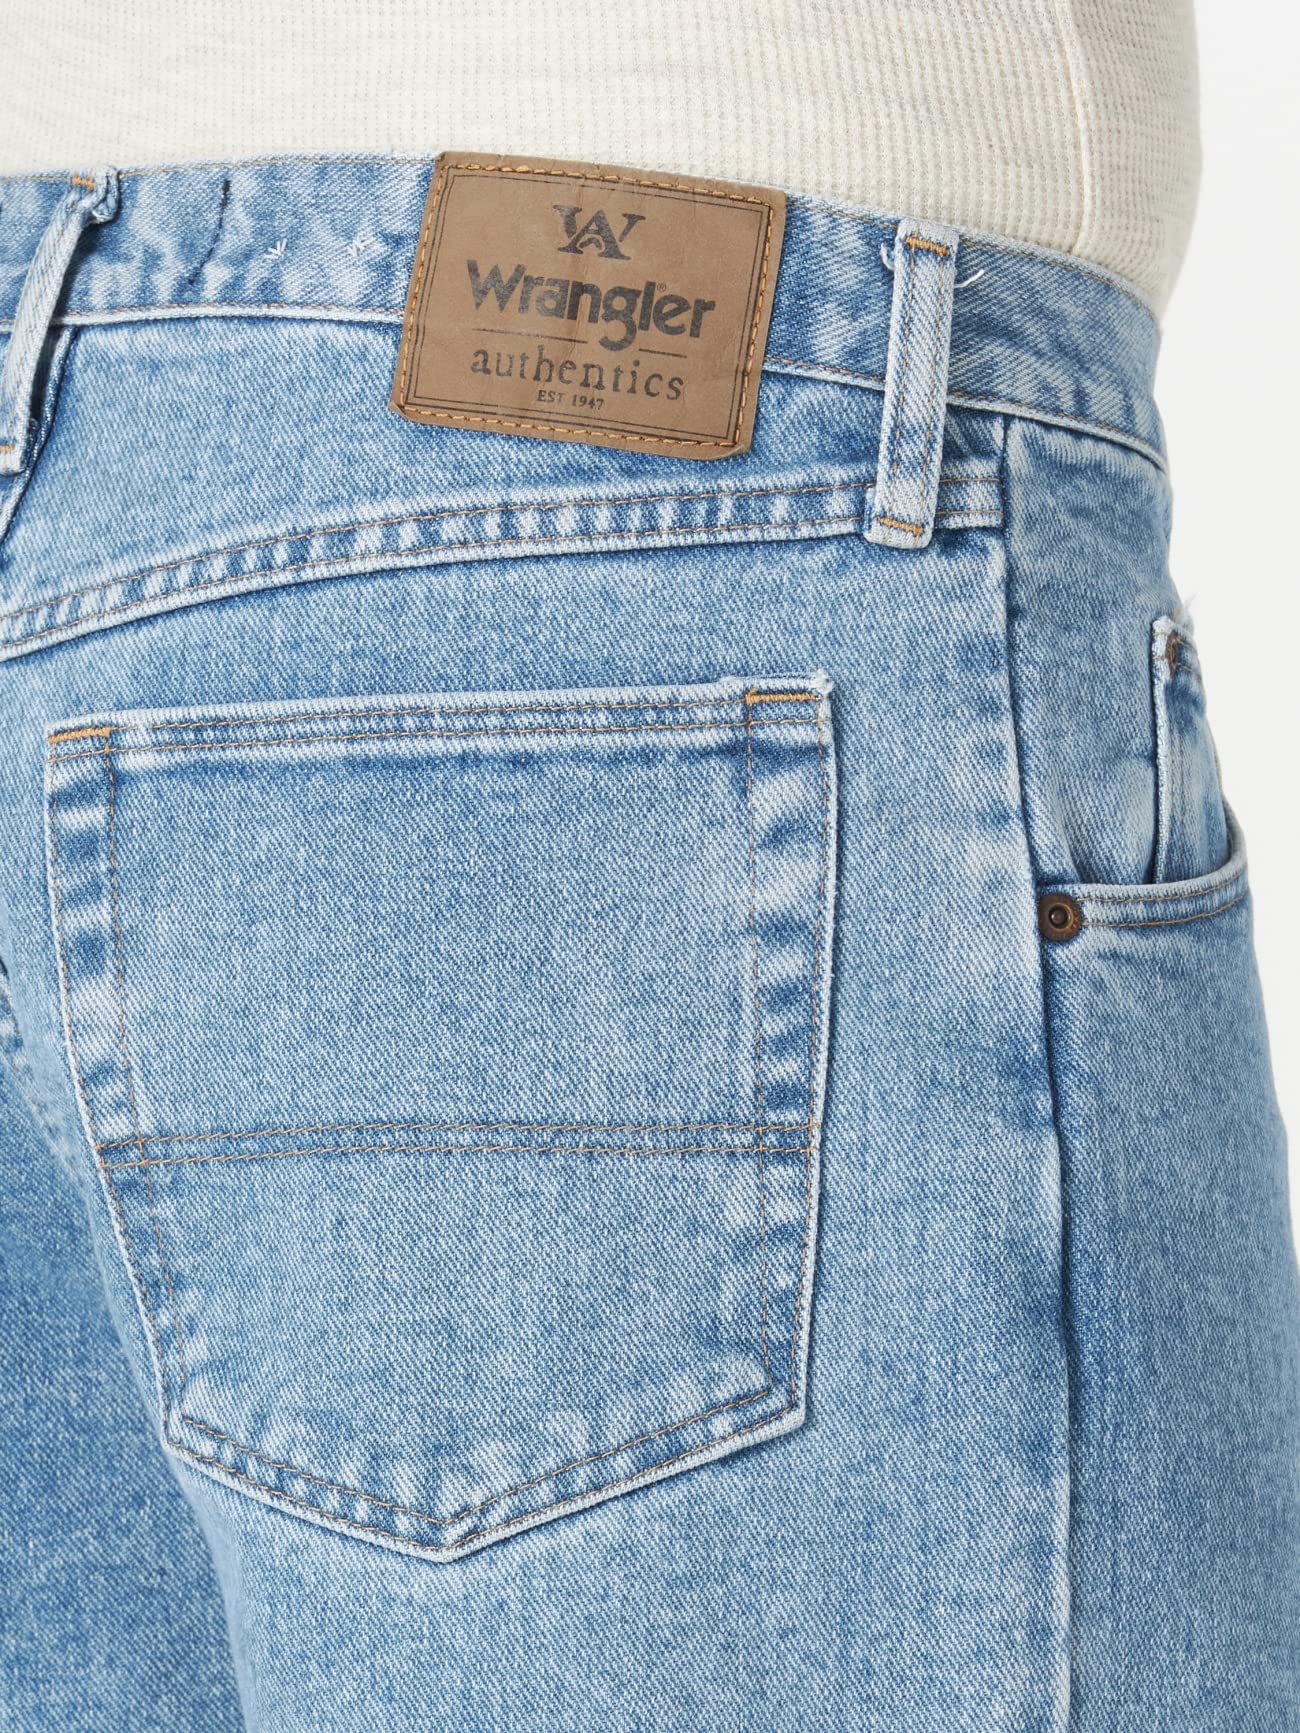 Wrangler Authentics Men's Classic 5-Pocket Relaxed Fit Cotton Jean, Stone Bleach, 38W x 30L